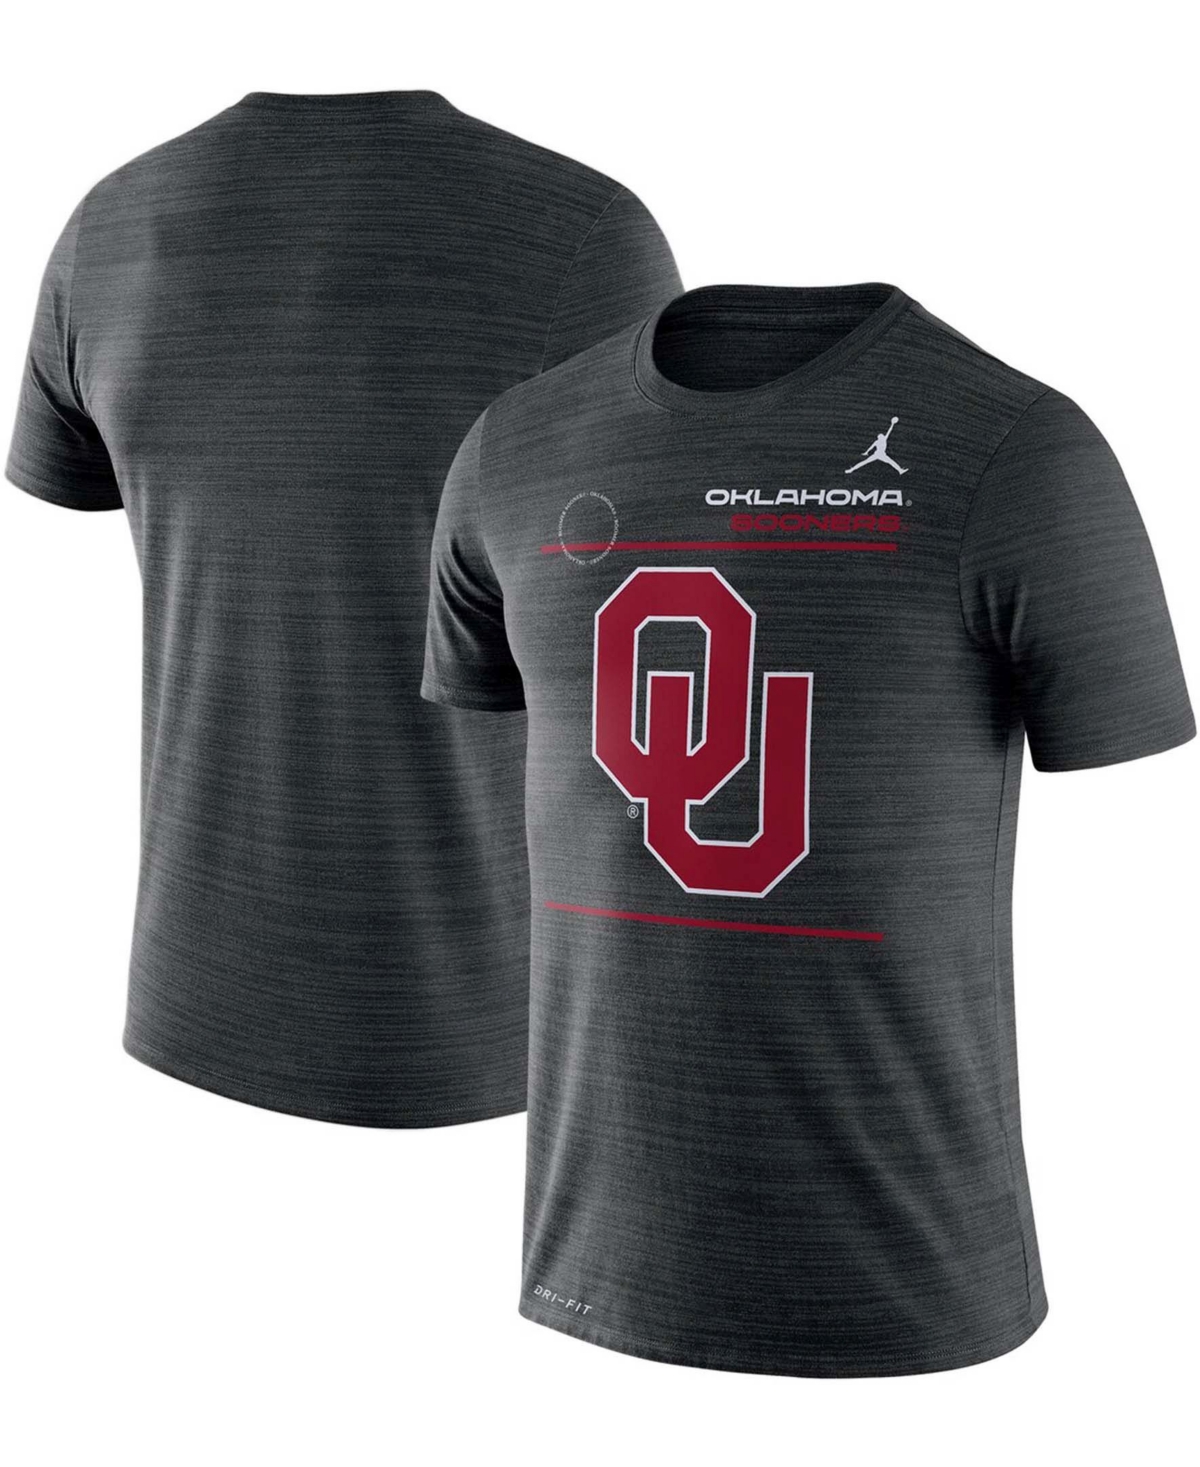 Men's Black Oklahoma Sooners 2021 Sideline Velocity Performance T-shirt